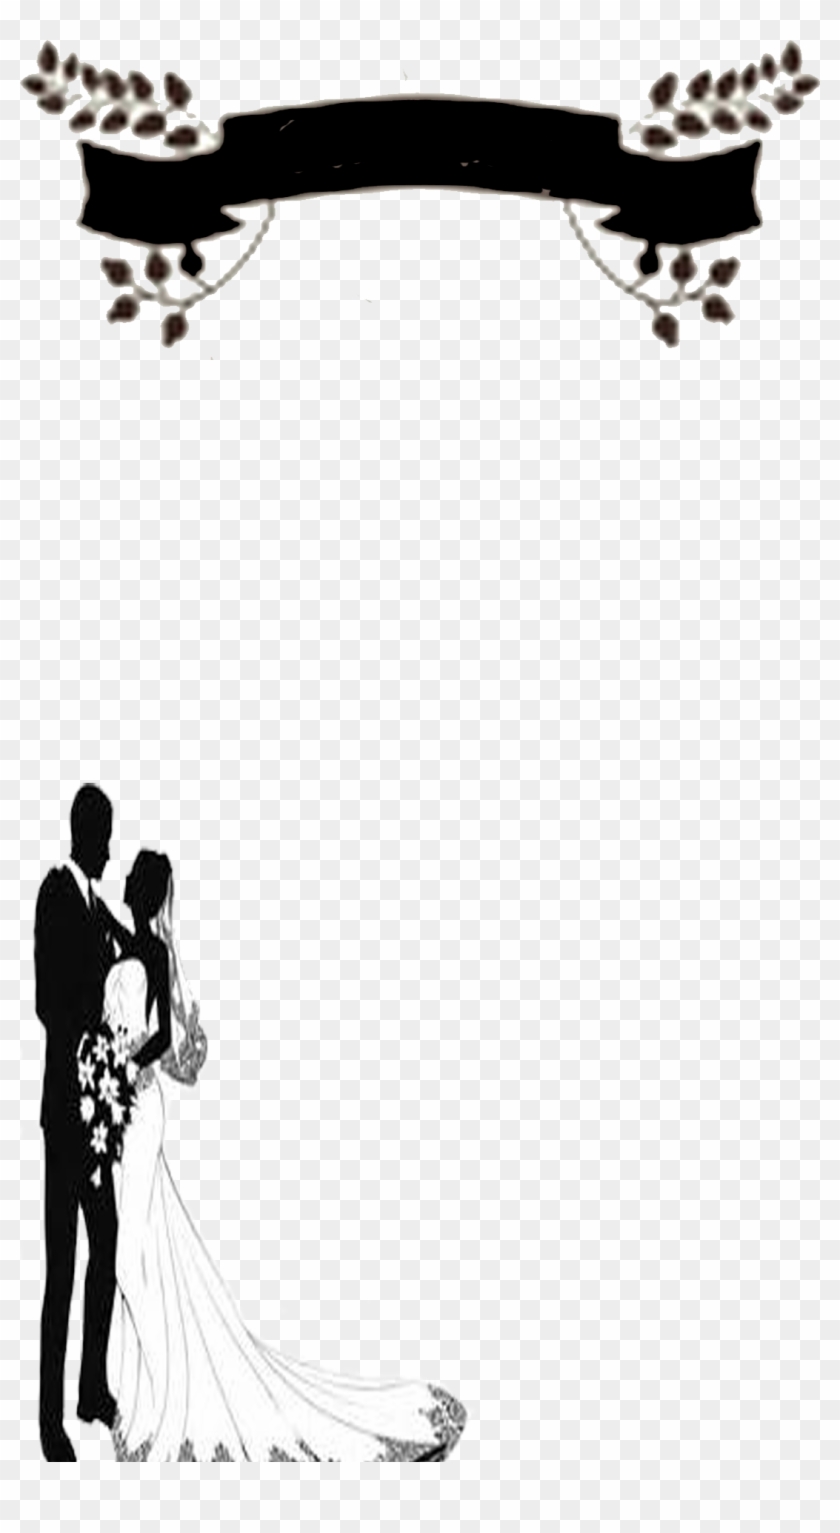 Black & White Bride And Groom - Illustration Clipart